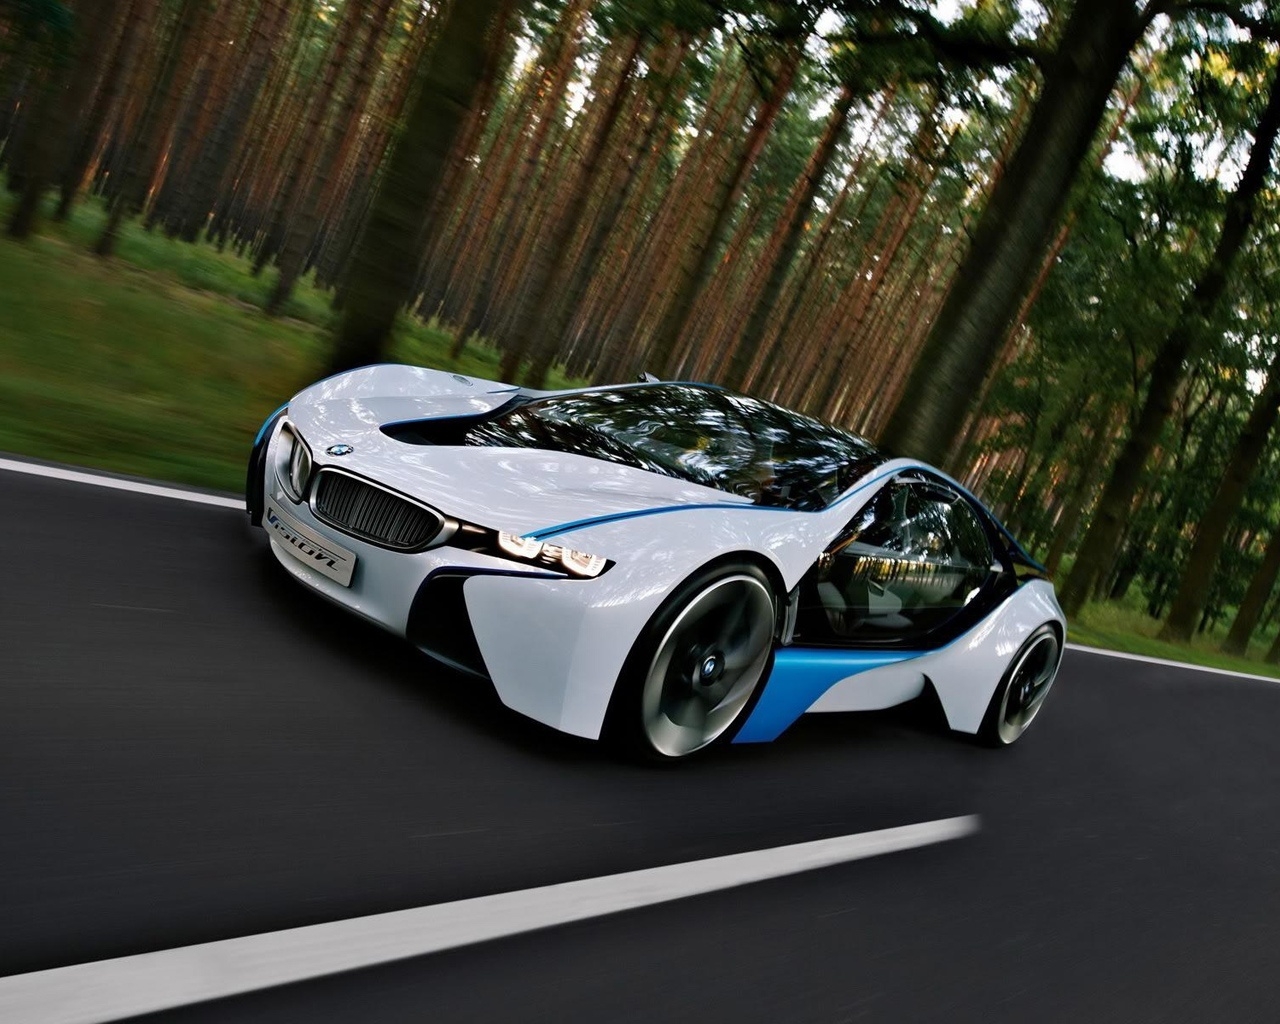 Superb BMW Vision Concept for 1280 x 1024 resolution